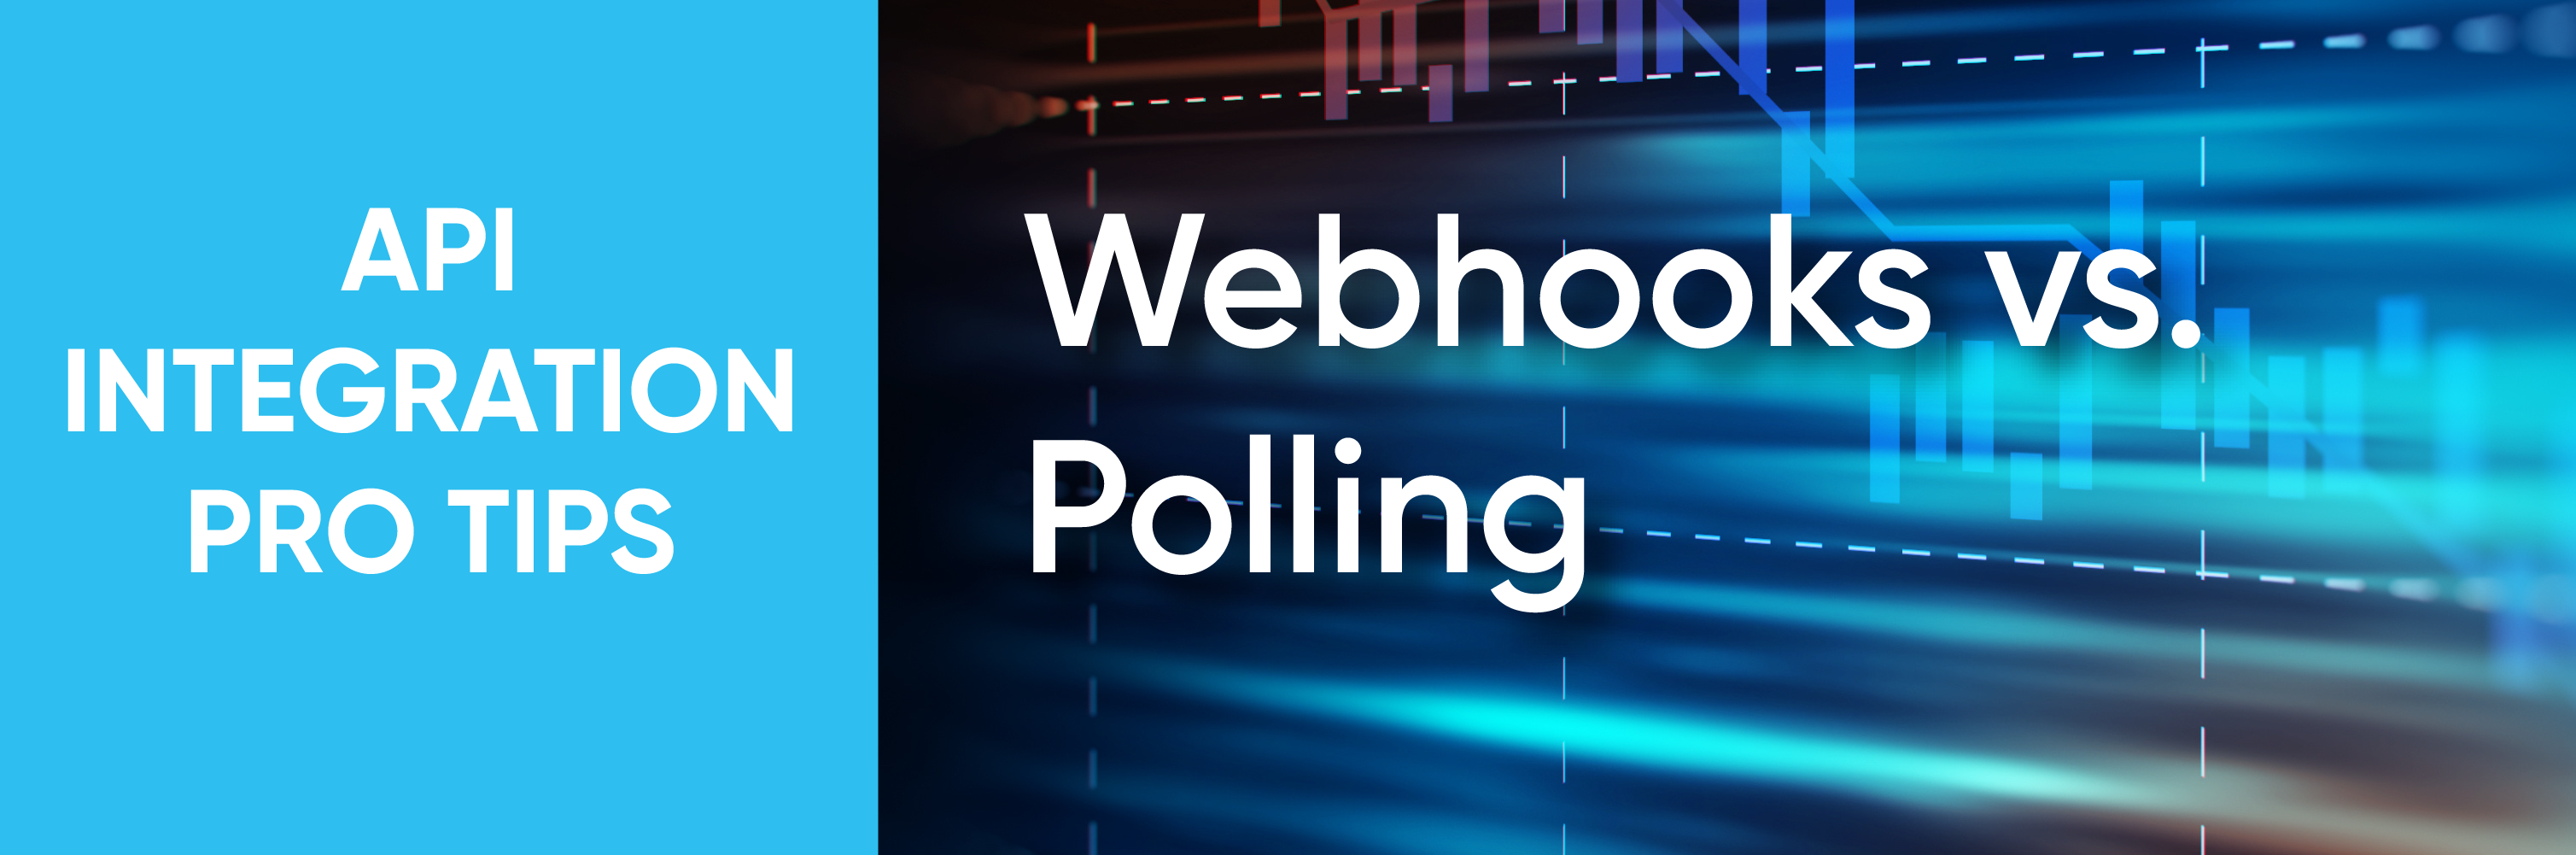 webhooks vs polling